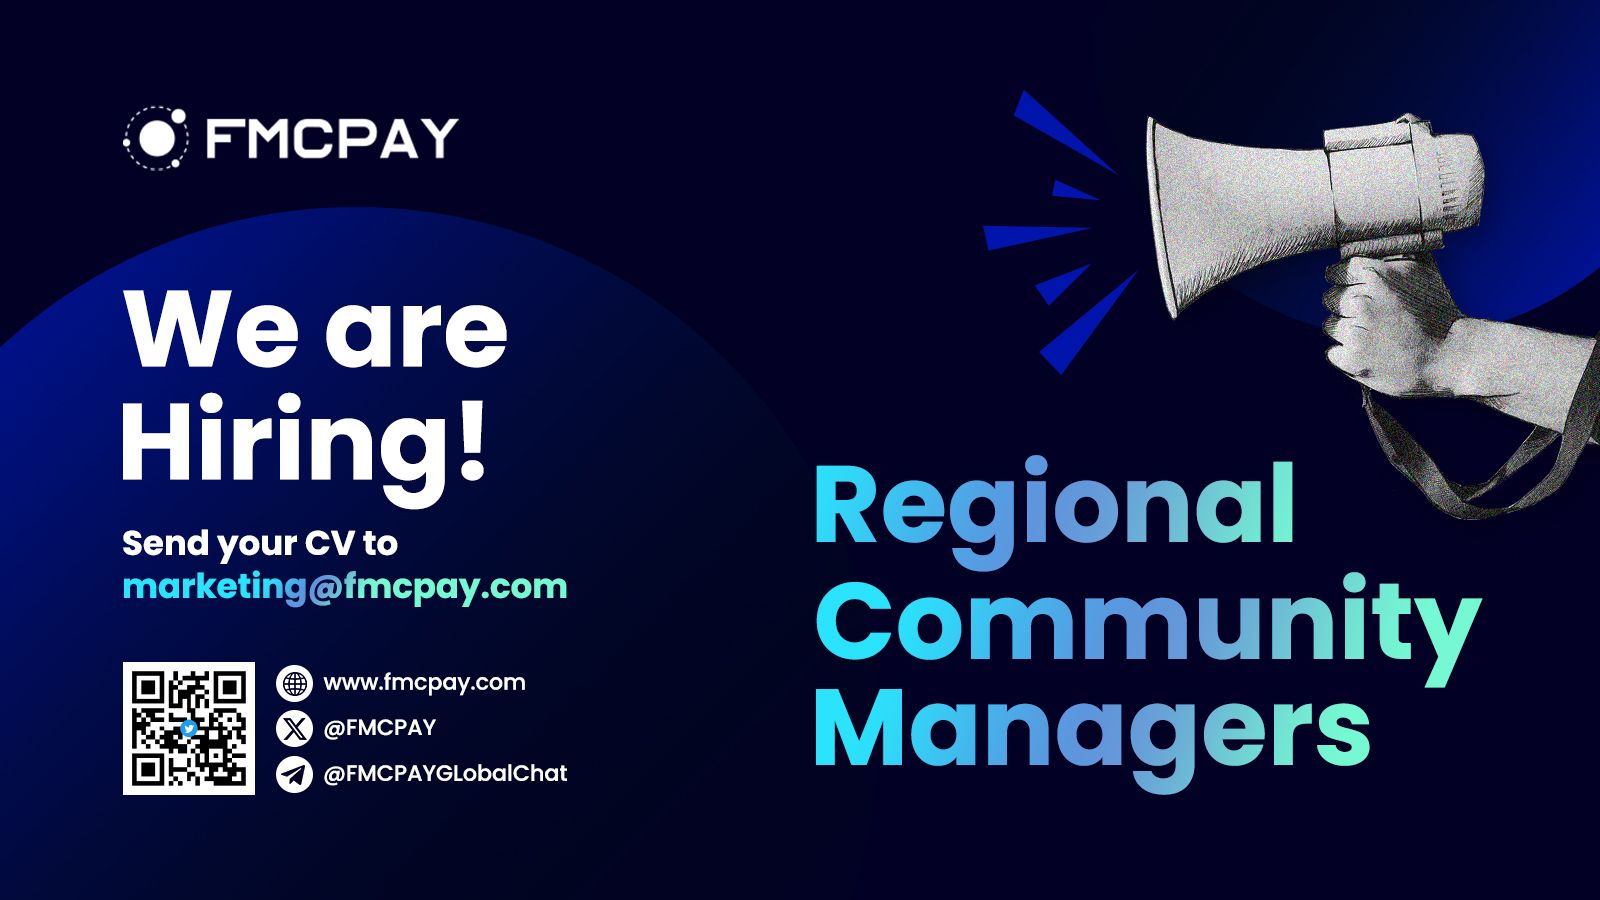 fmcpay-regional-community-manager